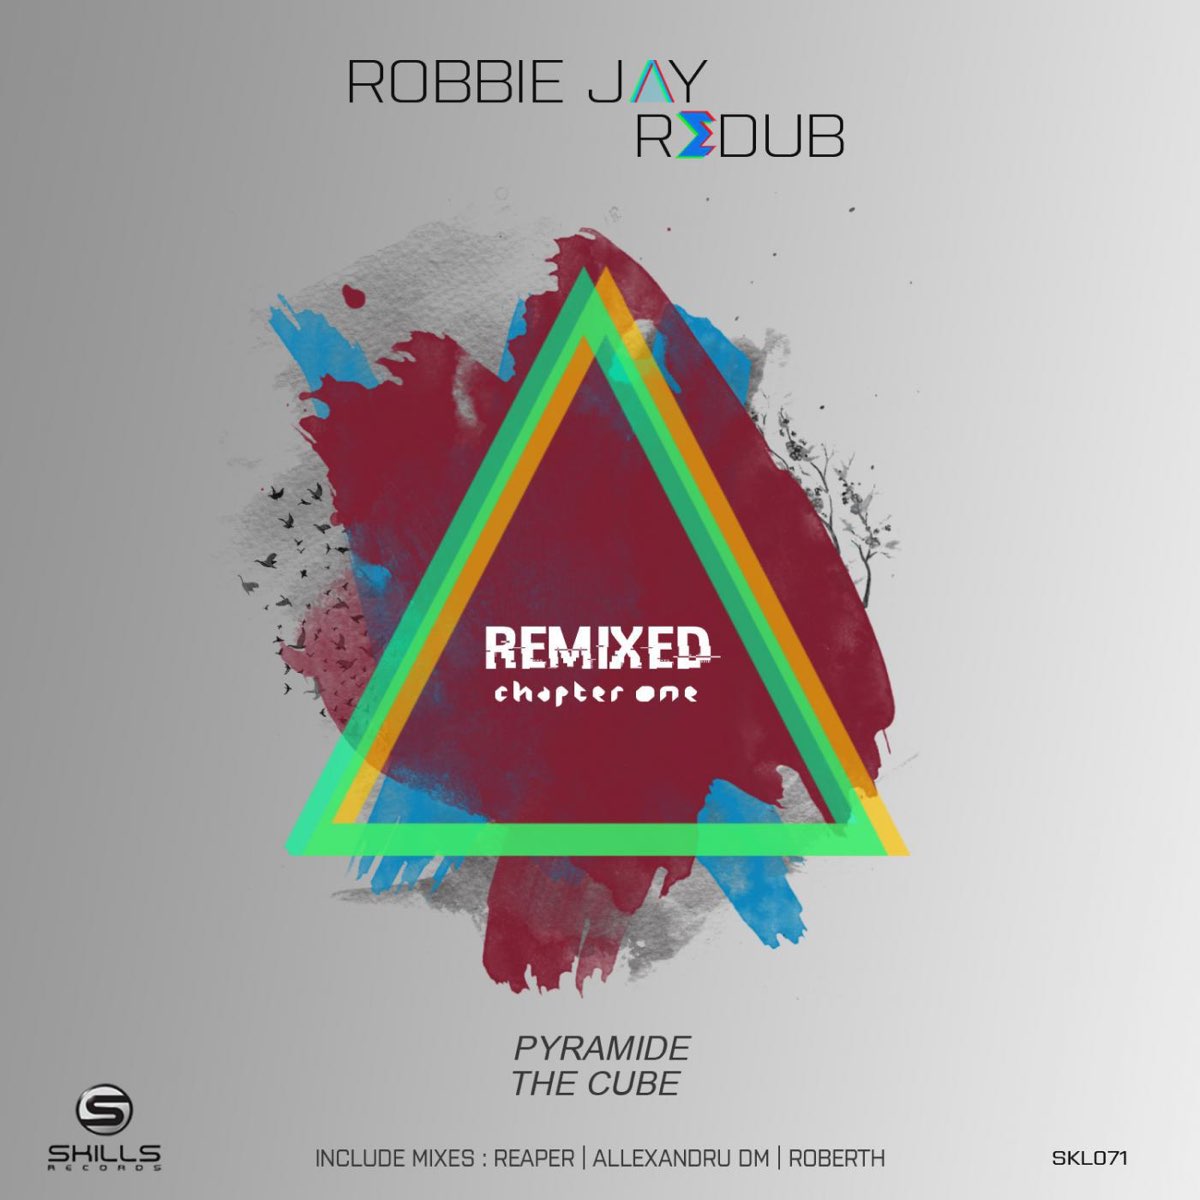 Cube remix